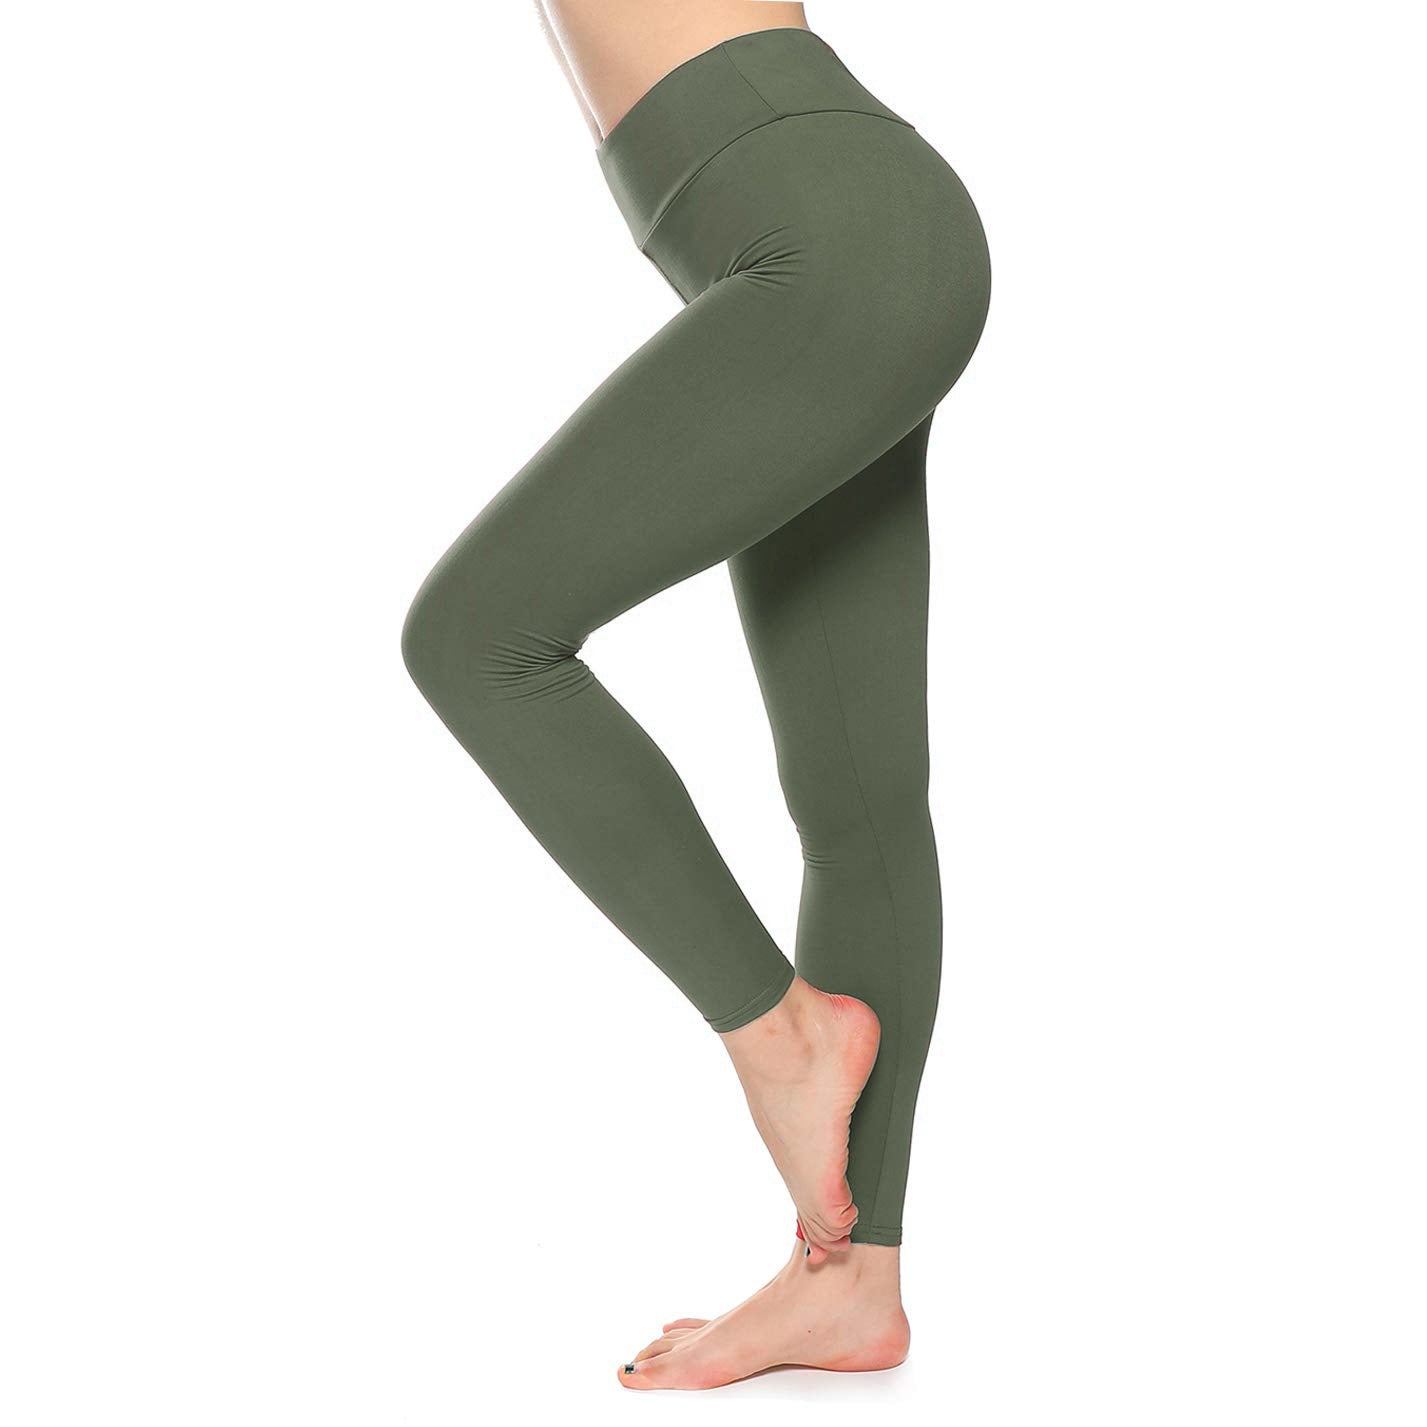 Sinopant Maternity High Waisted Yoga Stretchy Pants Women's Leggings